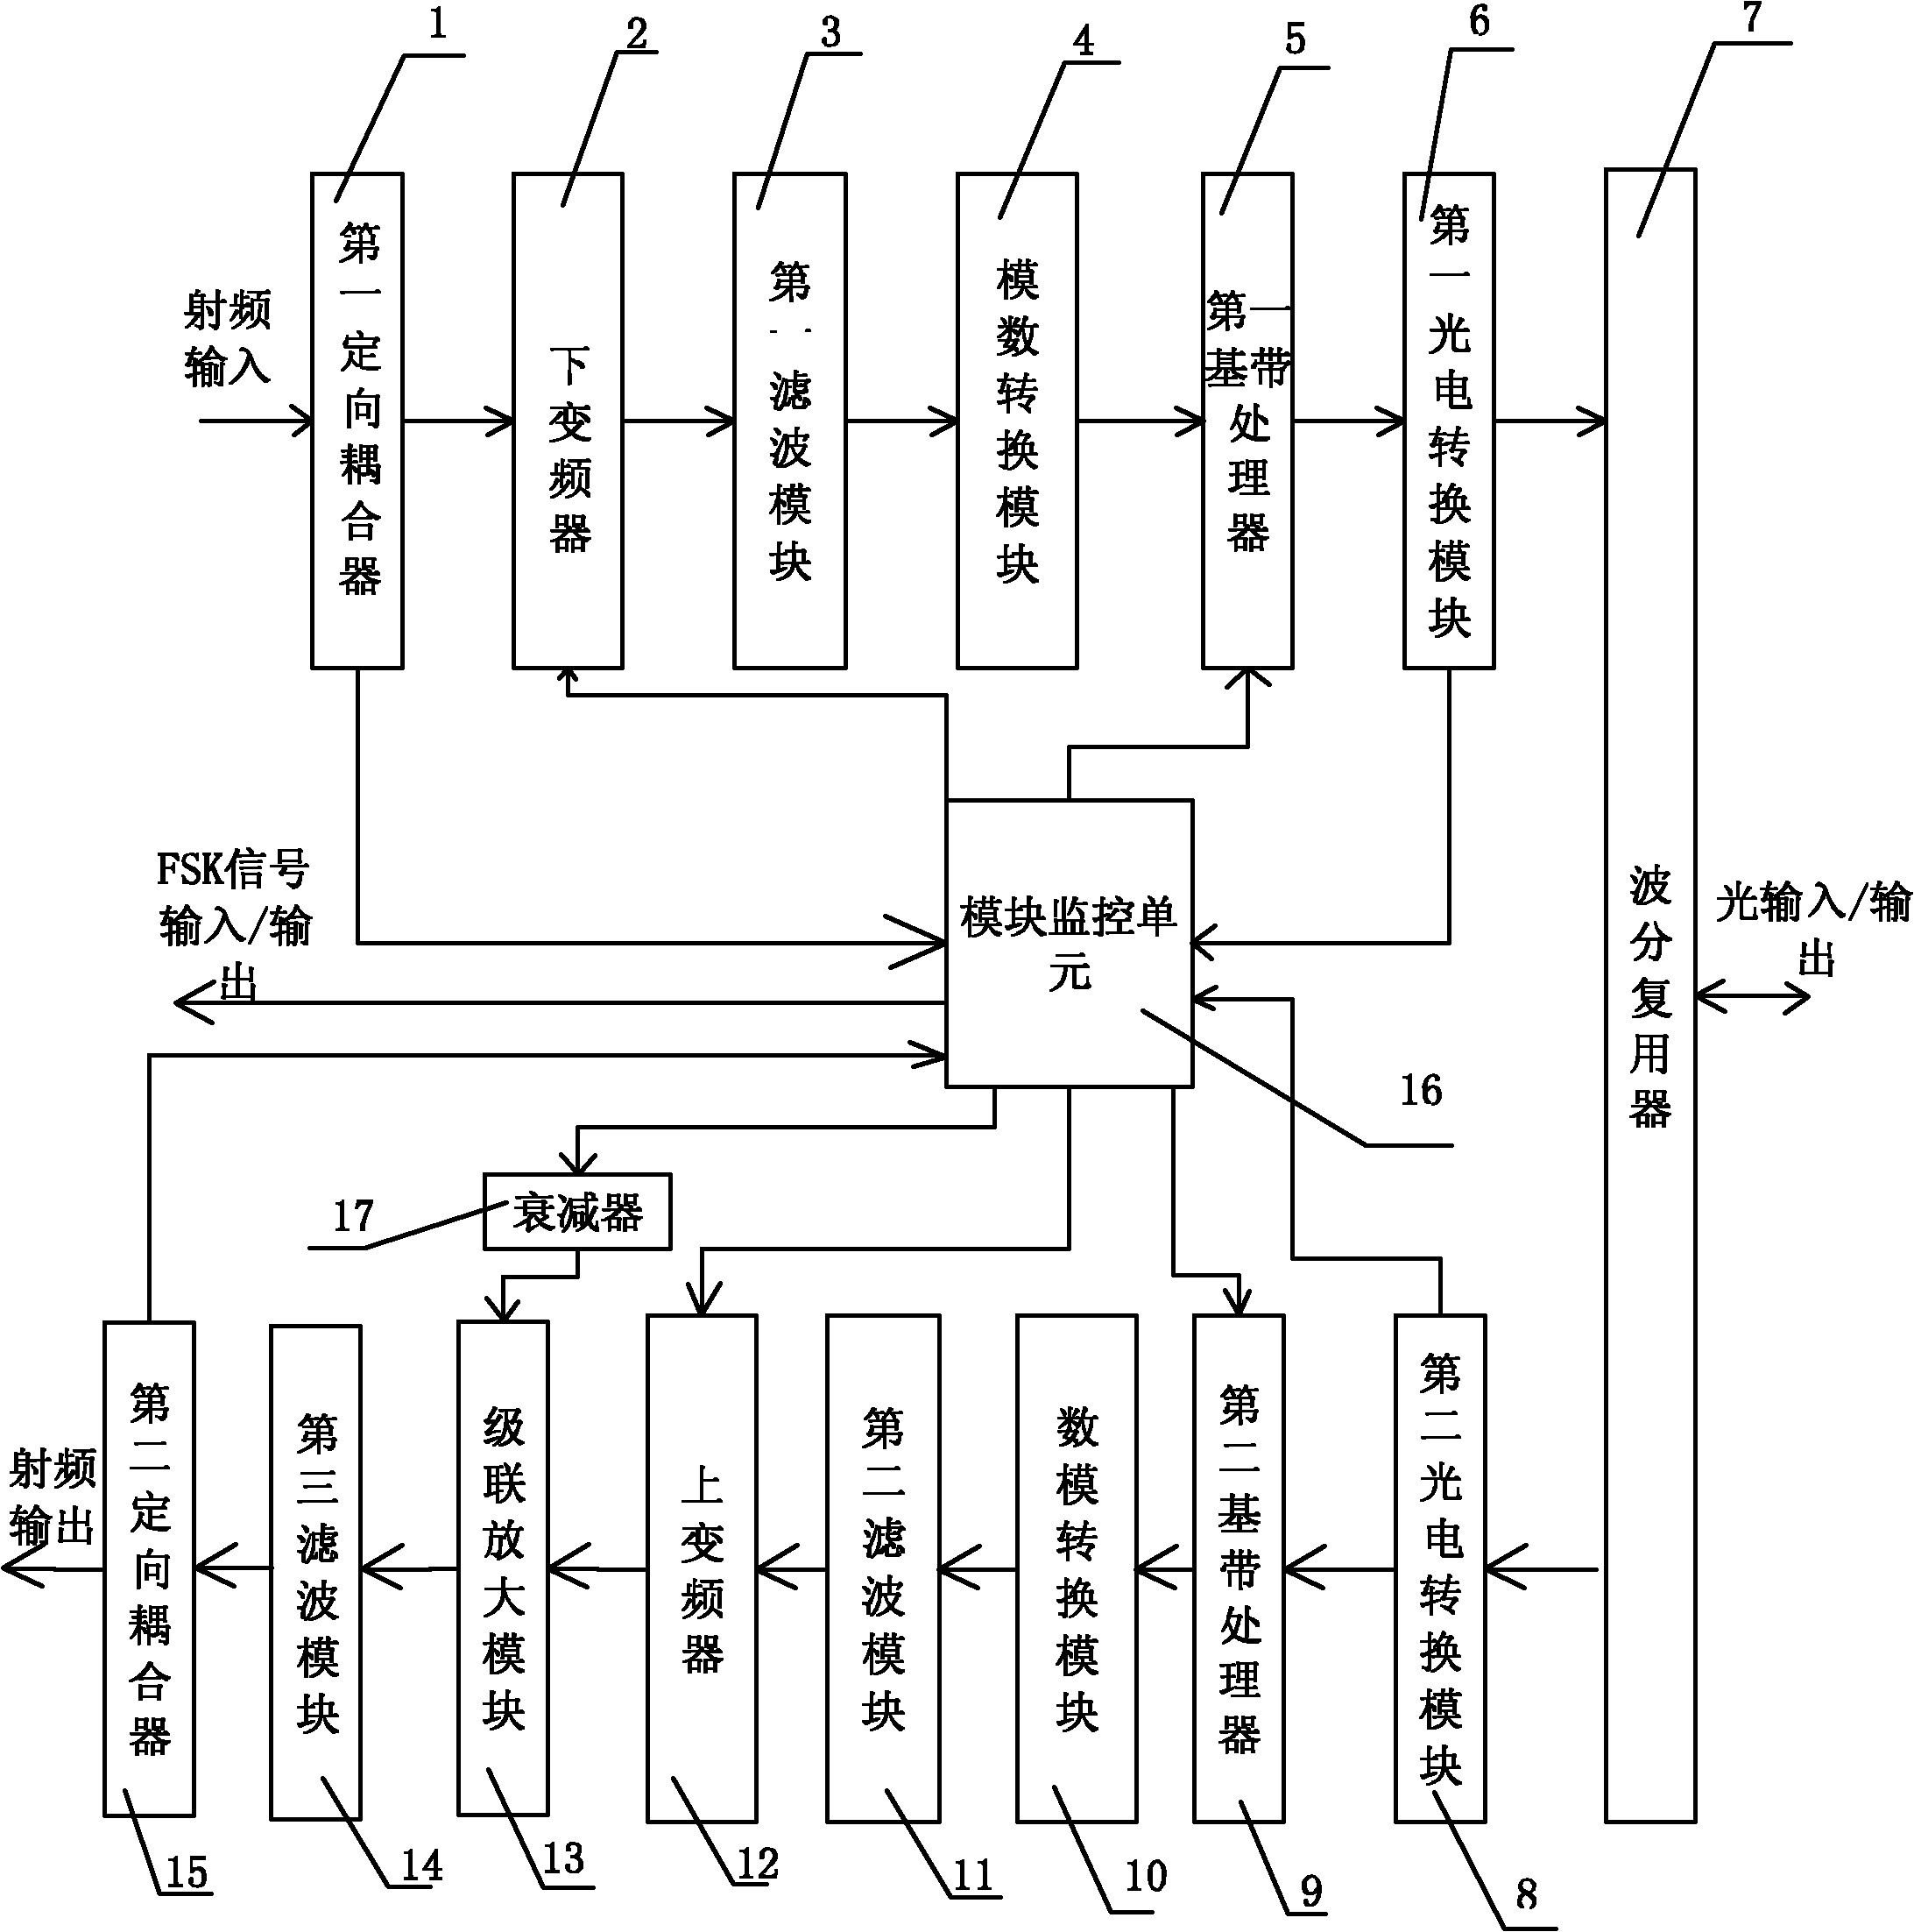 Two-waveband radio frequency (RF) optical transmission module